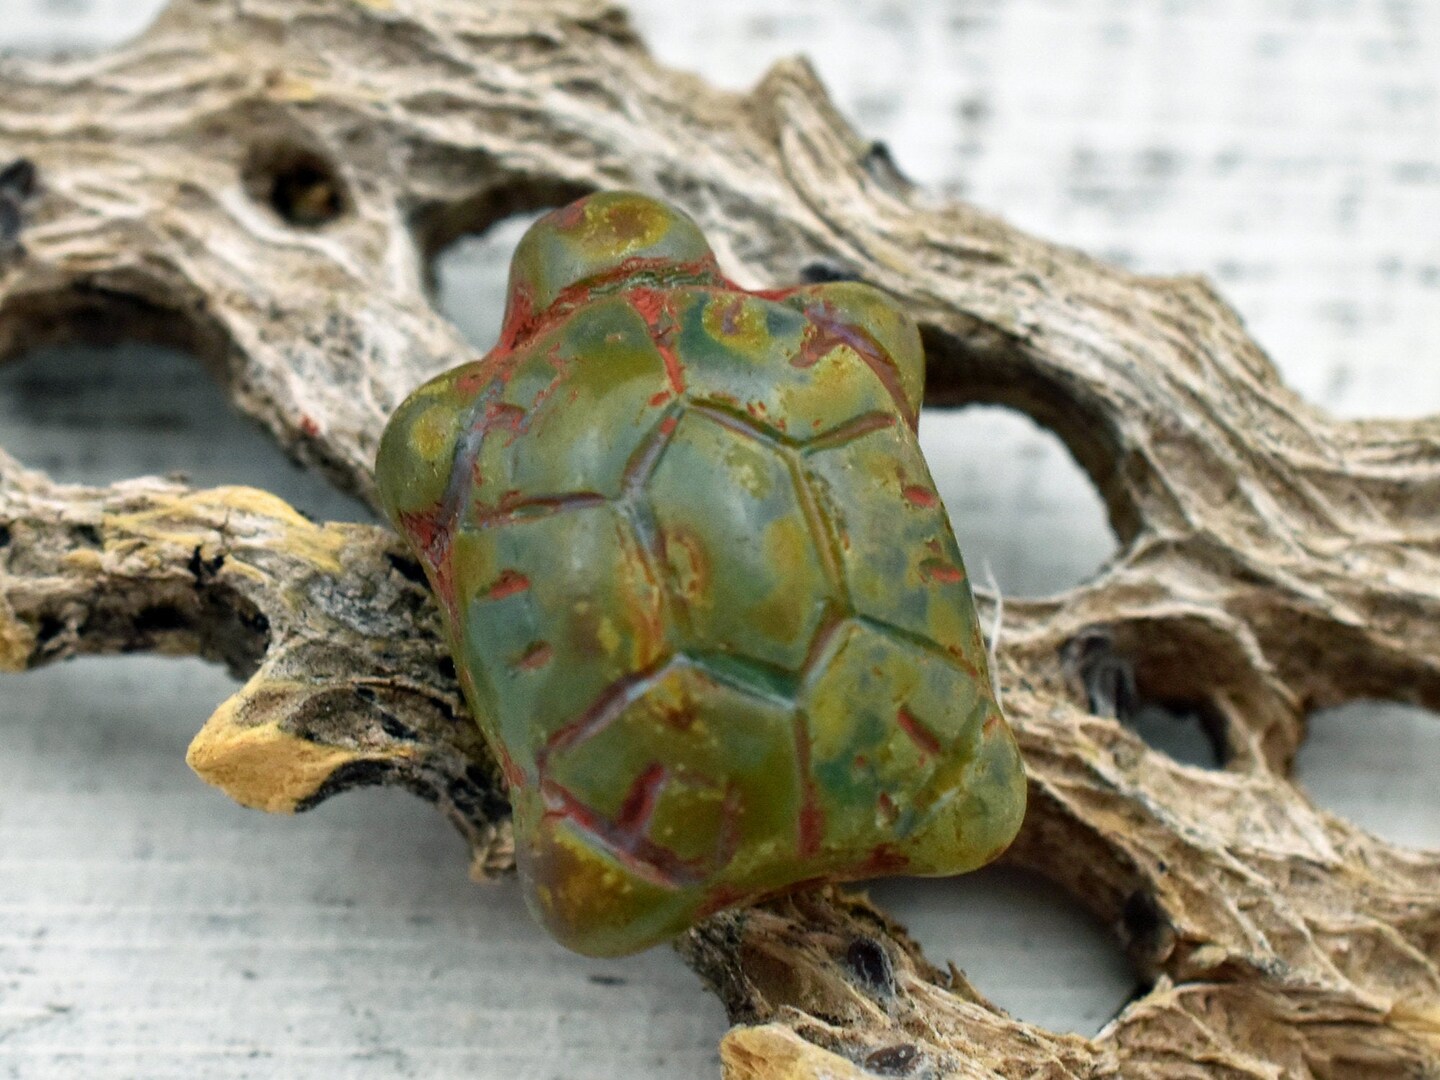 *4* 19x14mm Aqua Travertine Turtle Beads